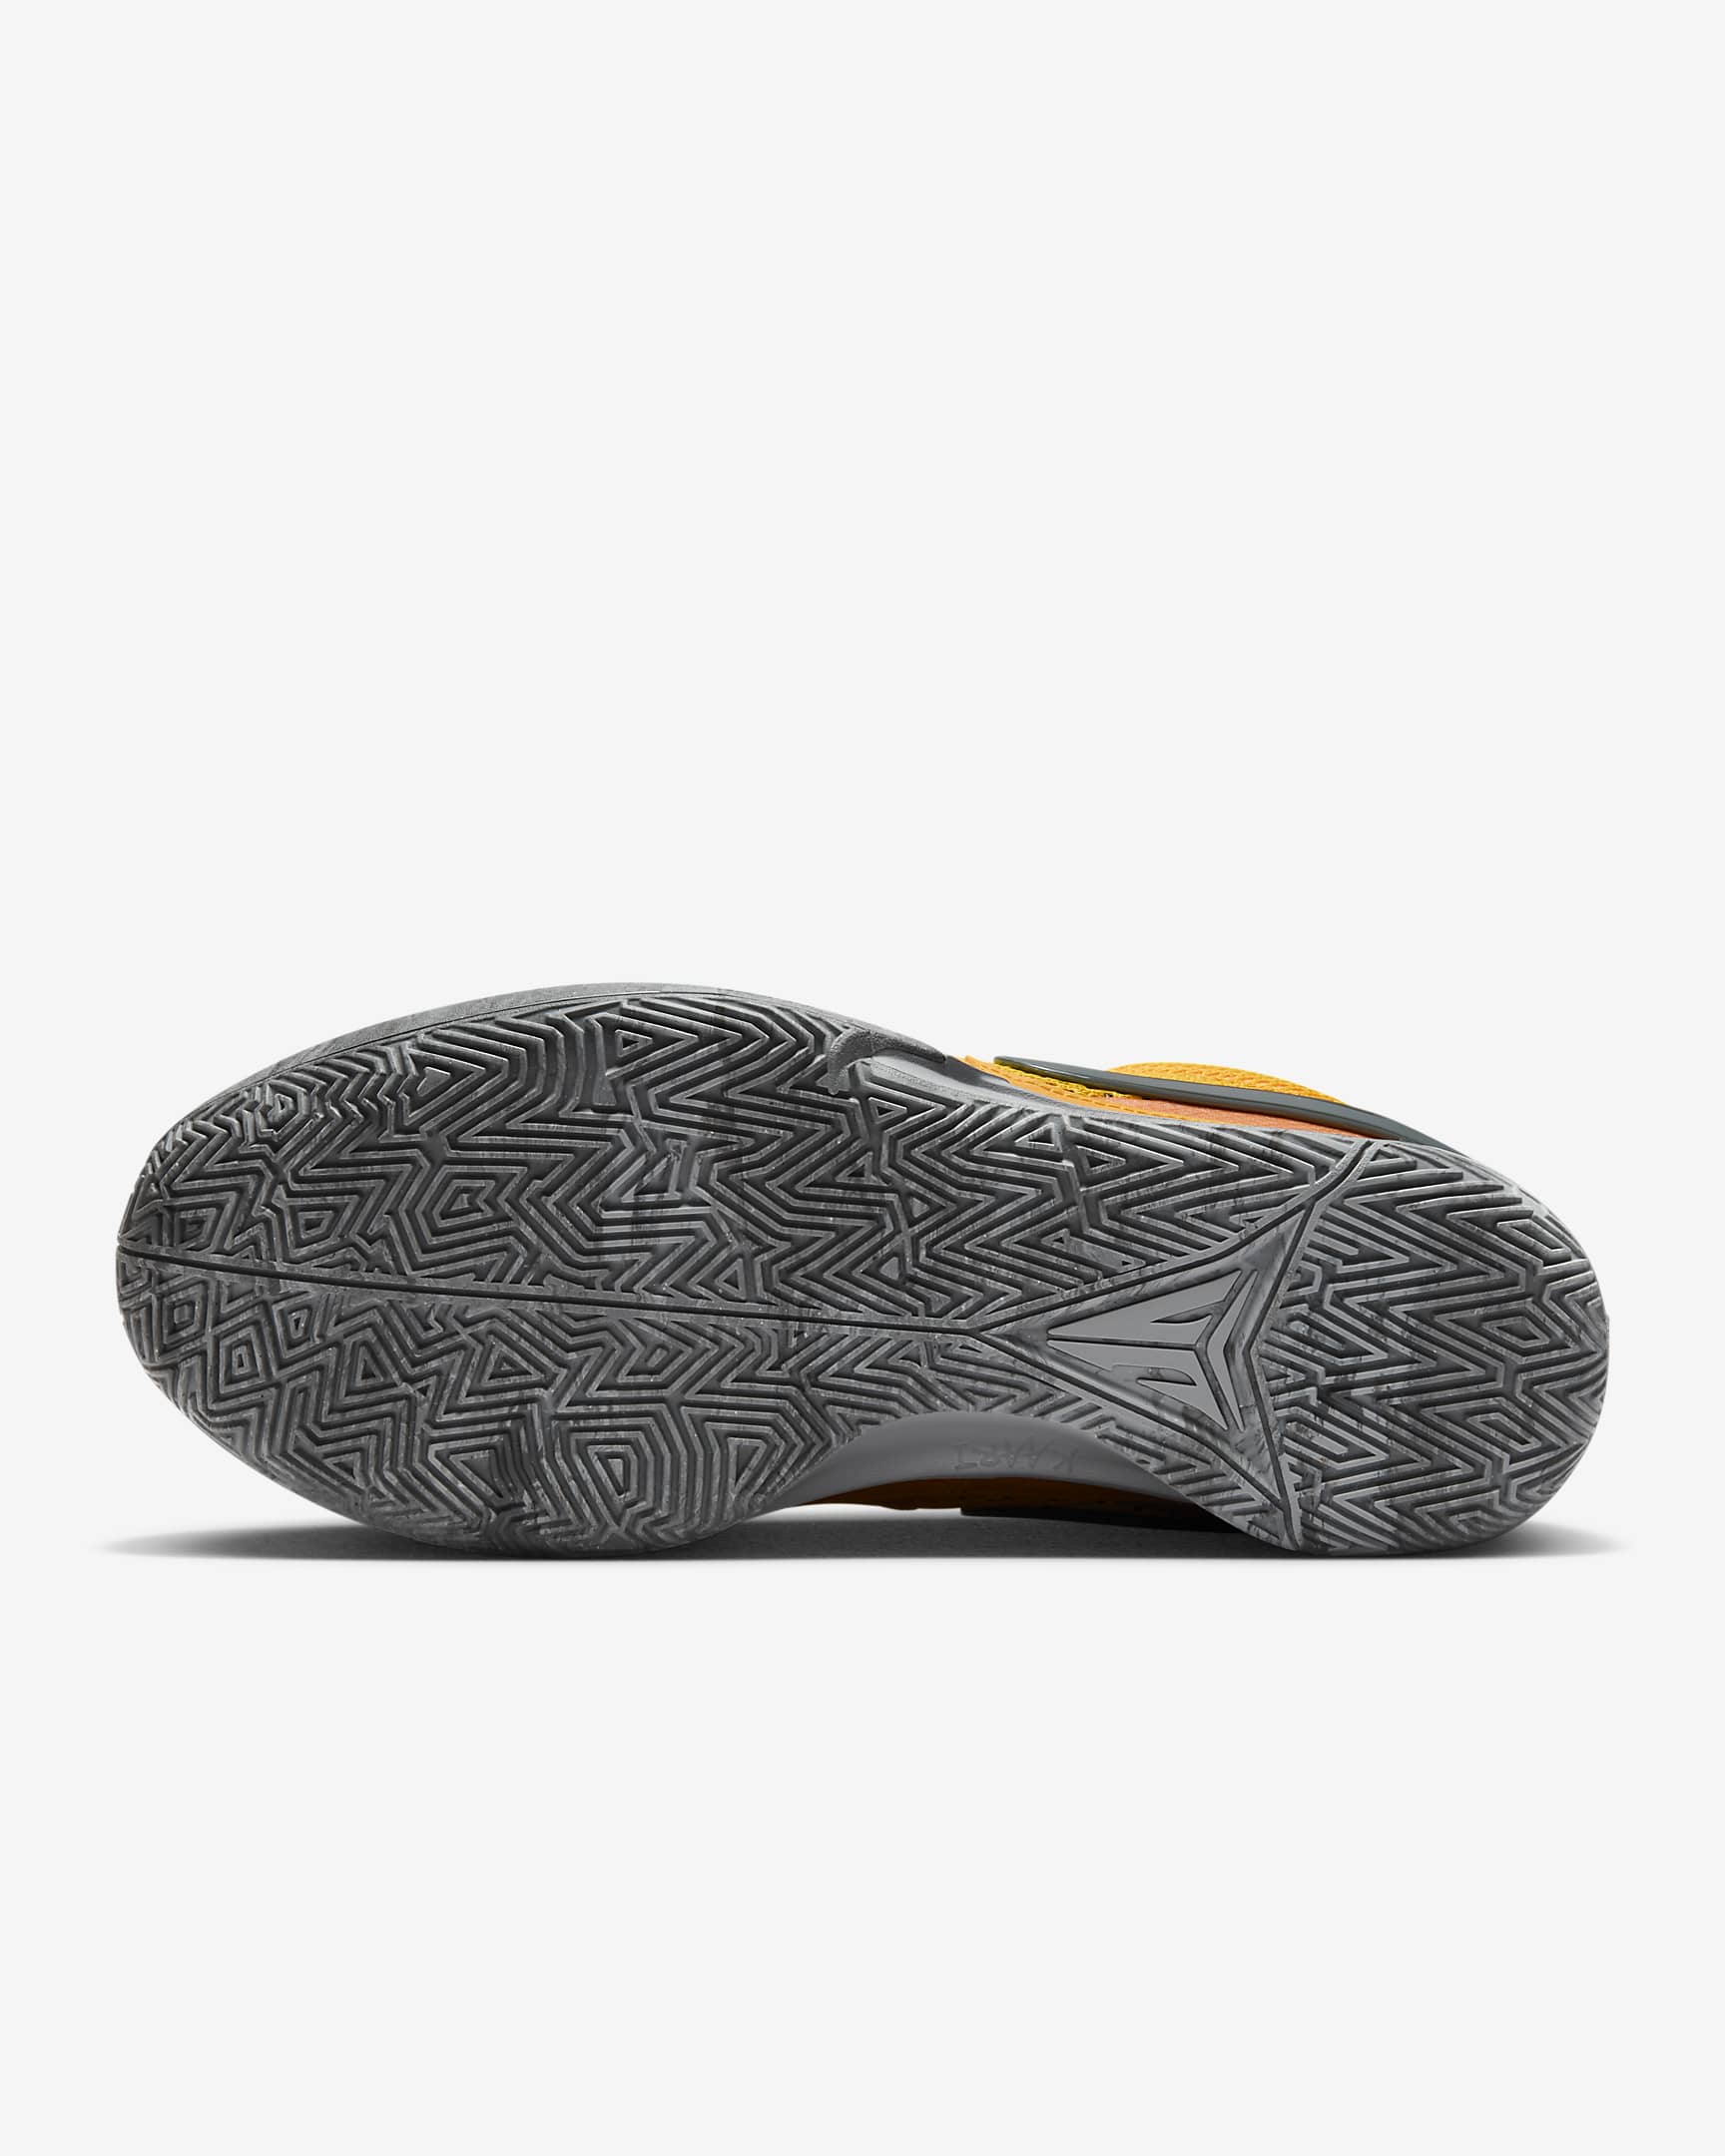 JA 1 'Wet Cement' Basketball Shoes. Nike DK